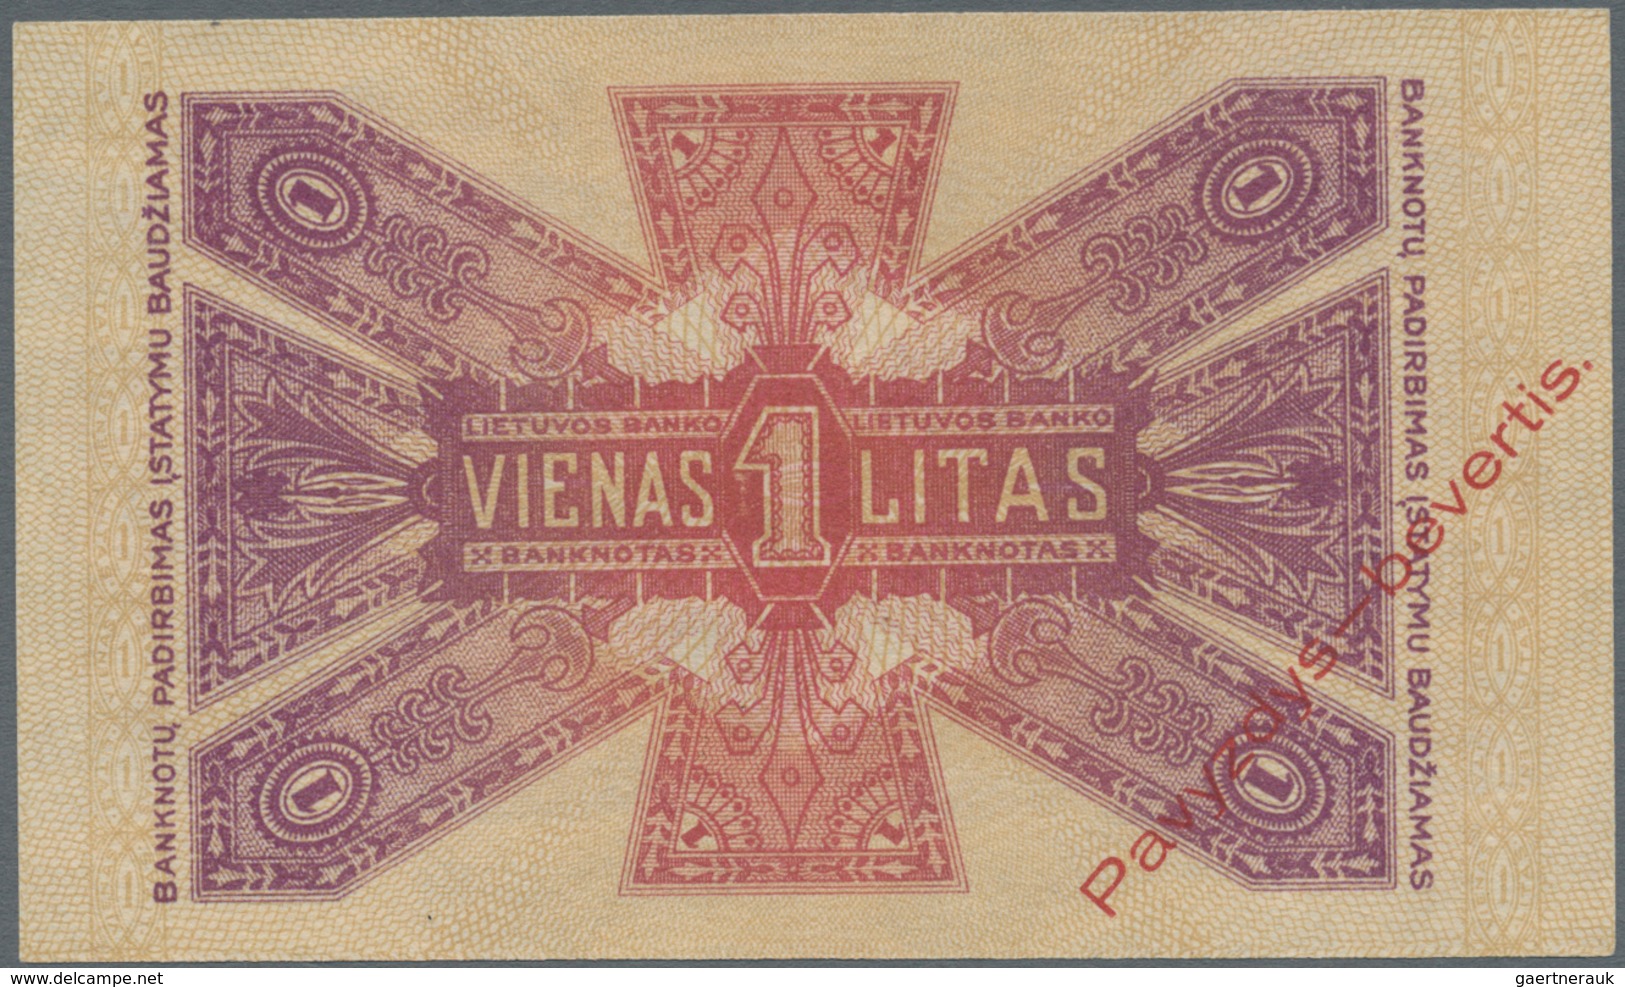 Lithuania / Litauen: 1 Litas 1922 SPECIMEN With Red Overprint "Pavyzdys - Bevertis", P.13s1 In Perfe - Litouwen